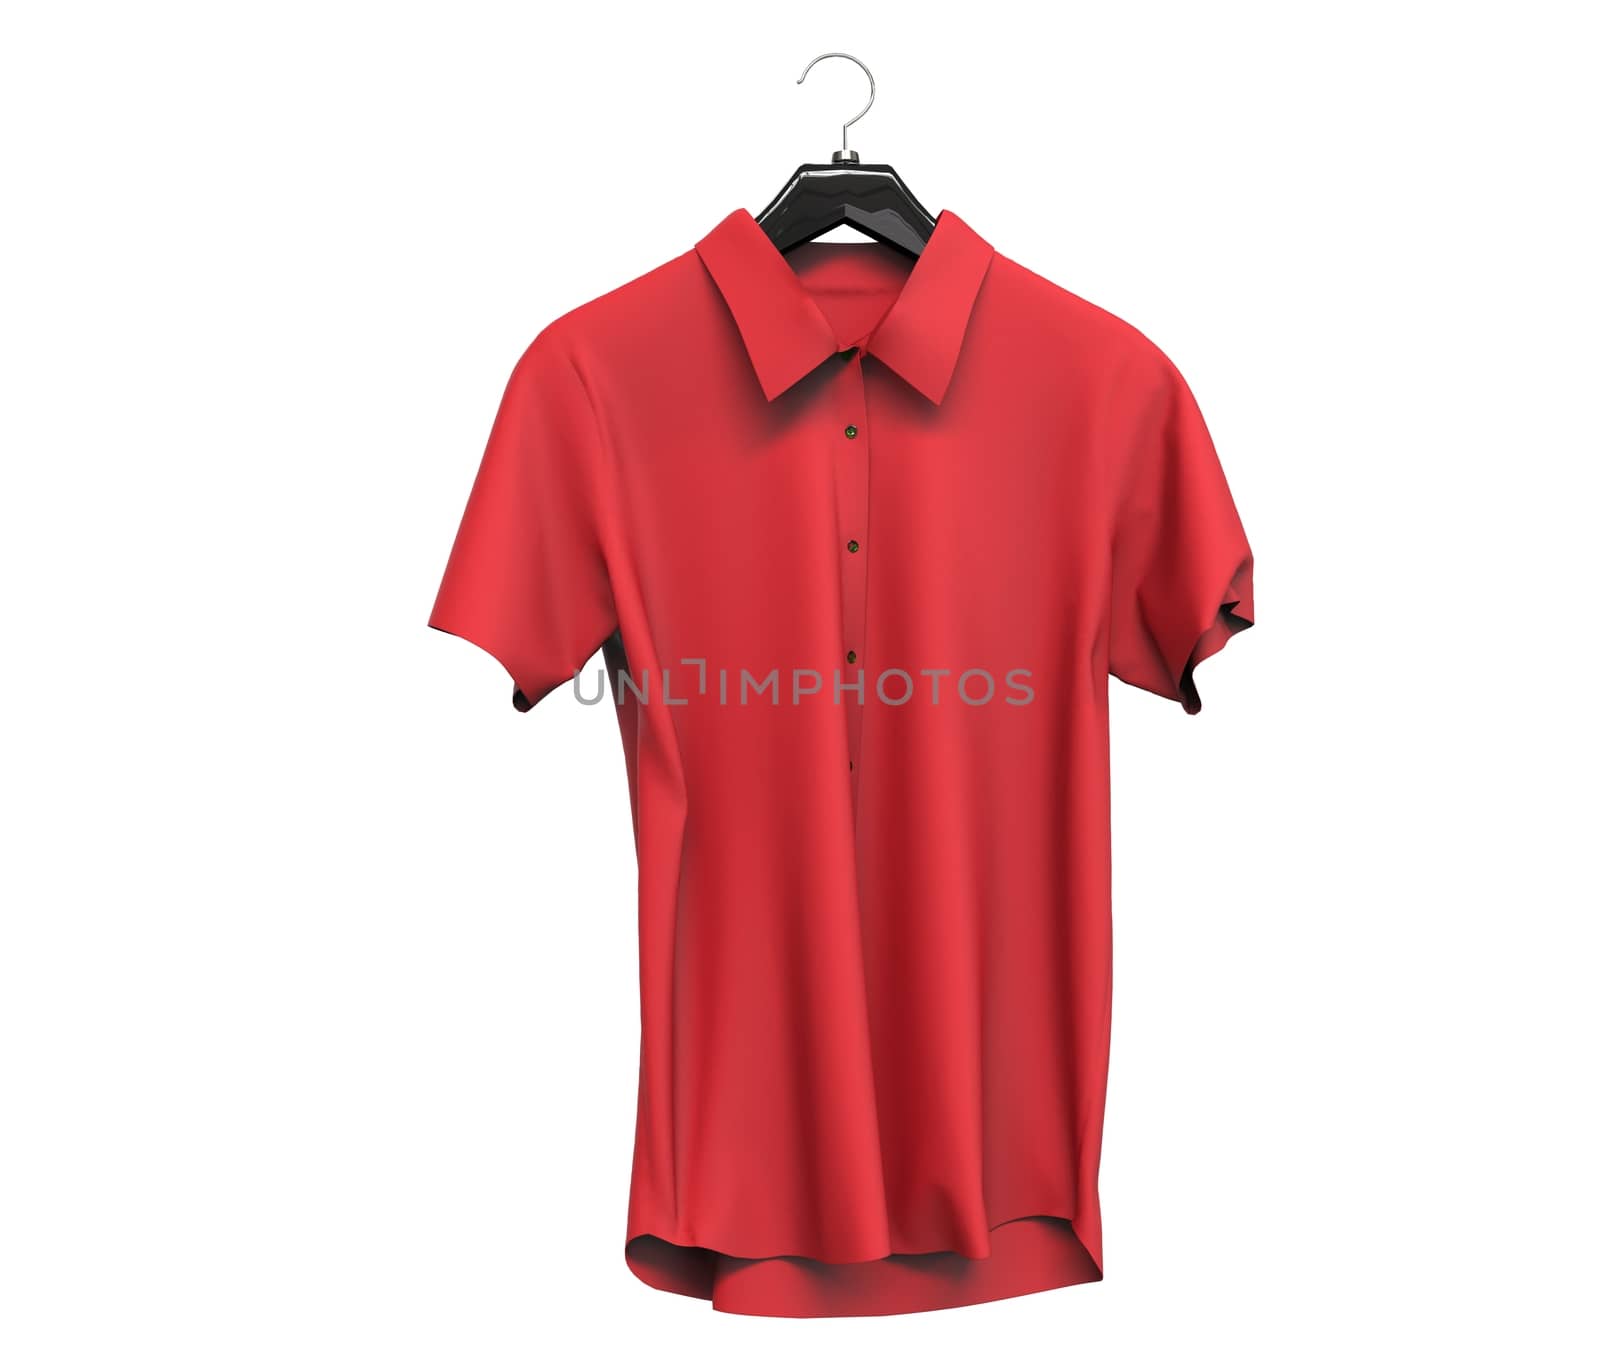 Red short sleeve shirt isolated on white background.